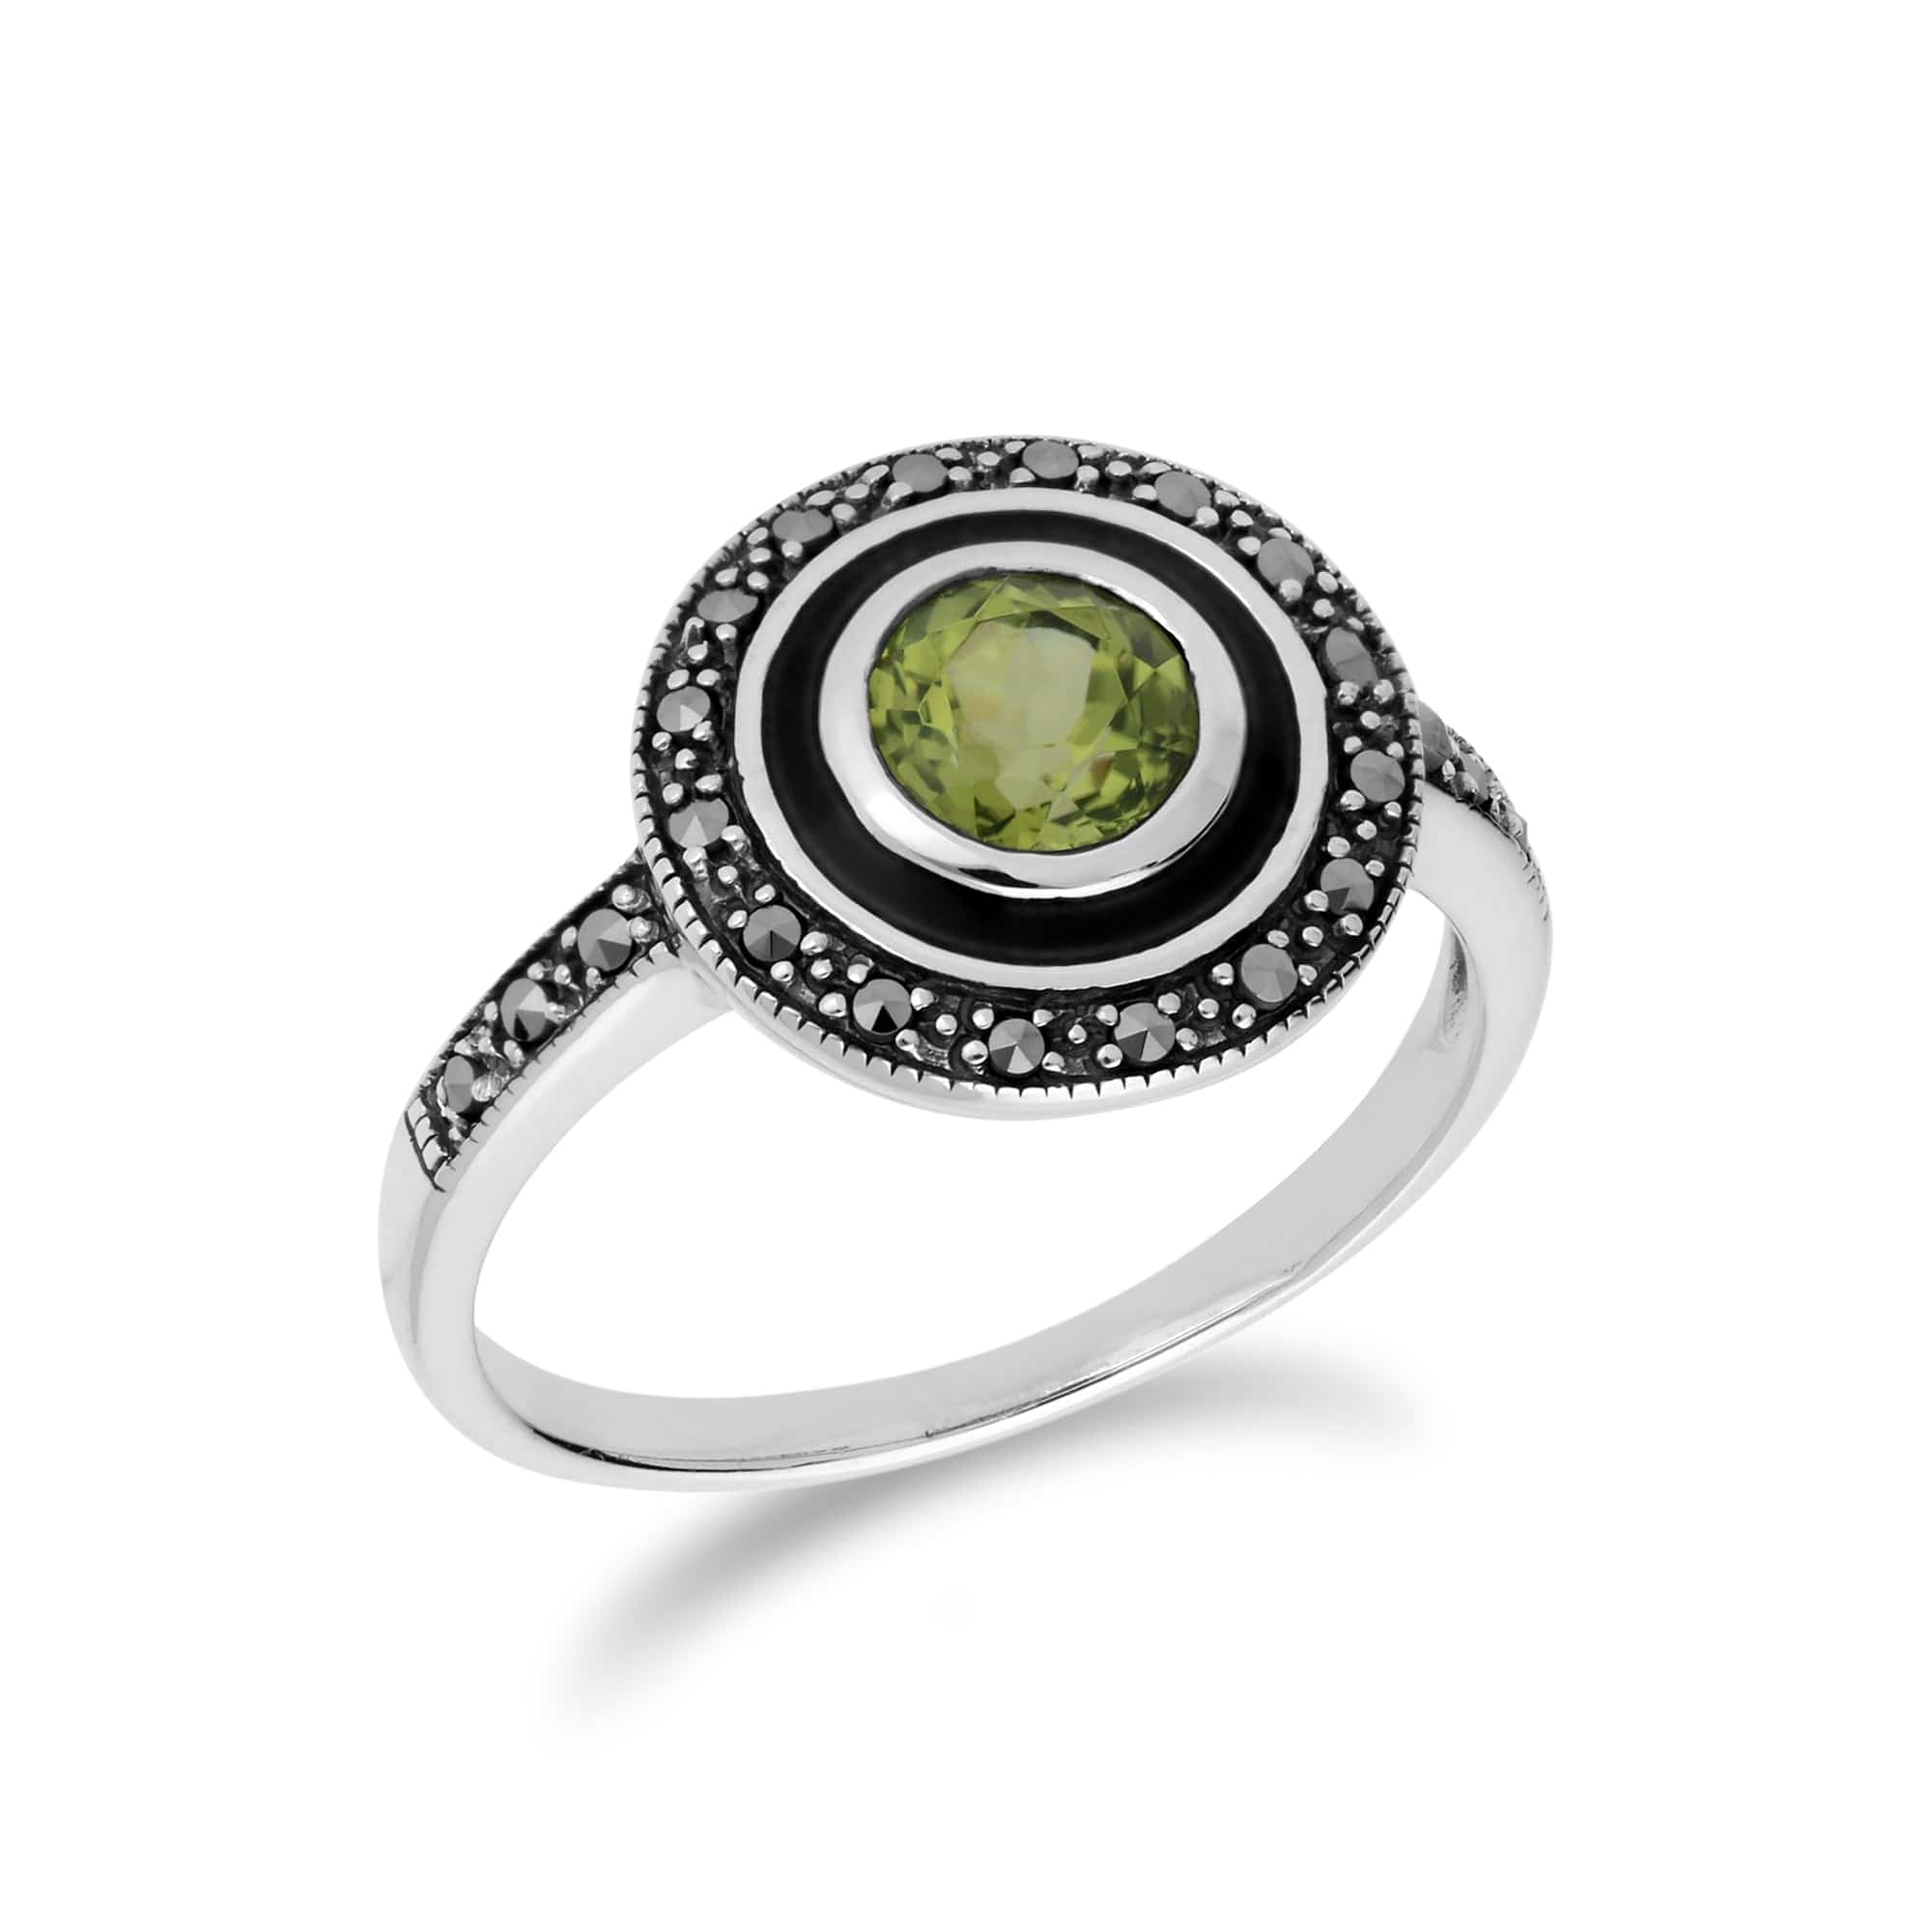 Art Deco Style Round Peridot & Black Enamel Halo Ring in 925 Sterling Silver - Gemondo